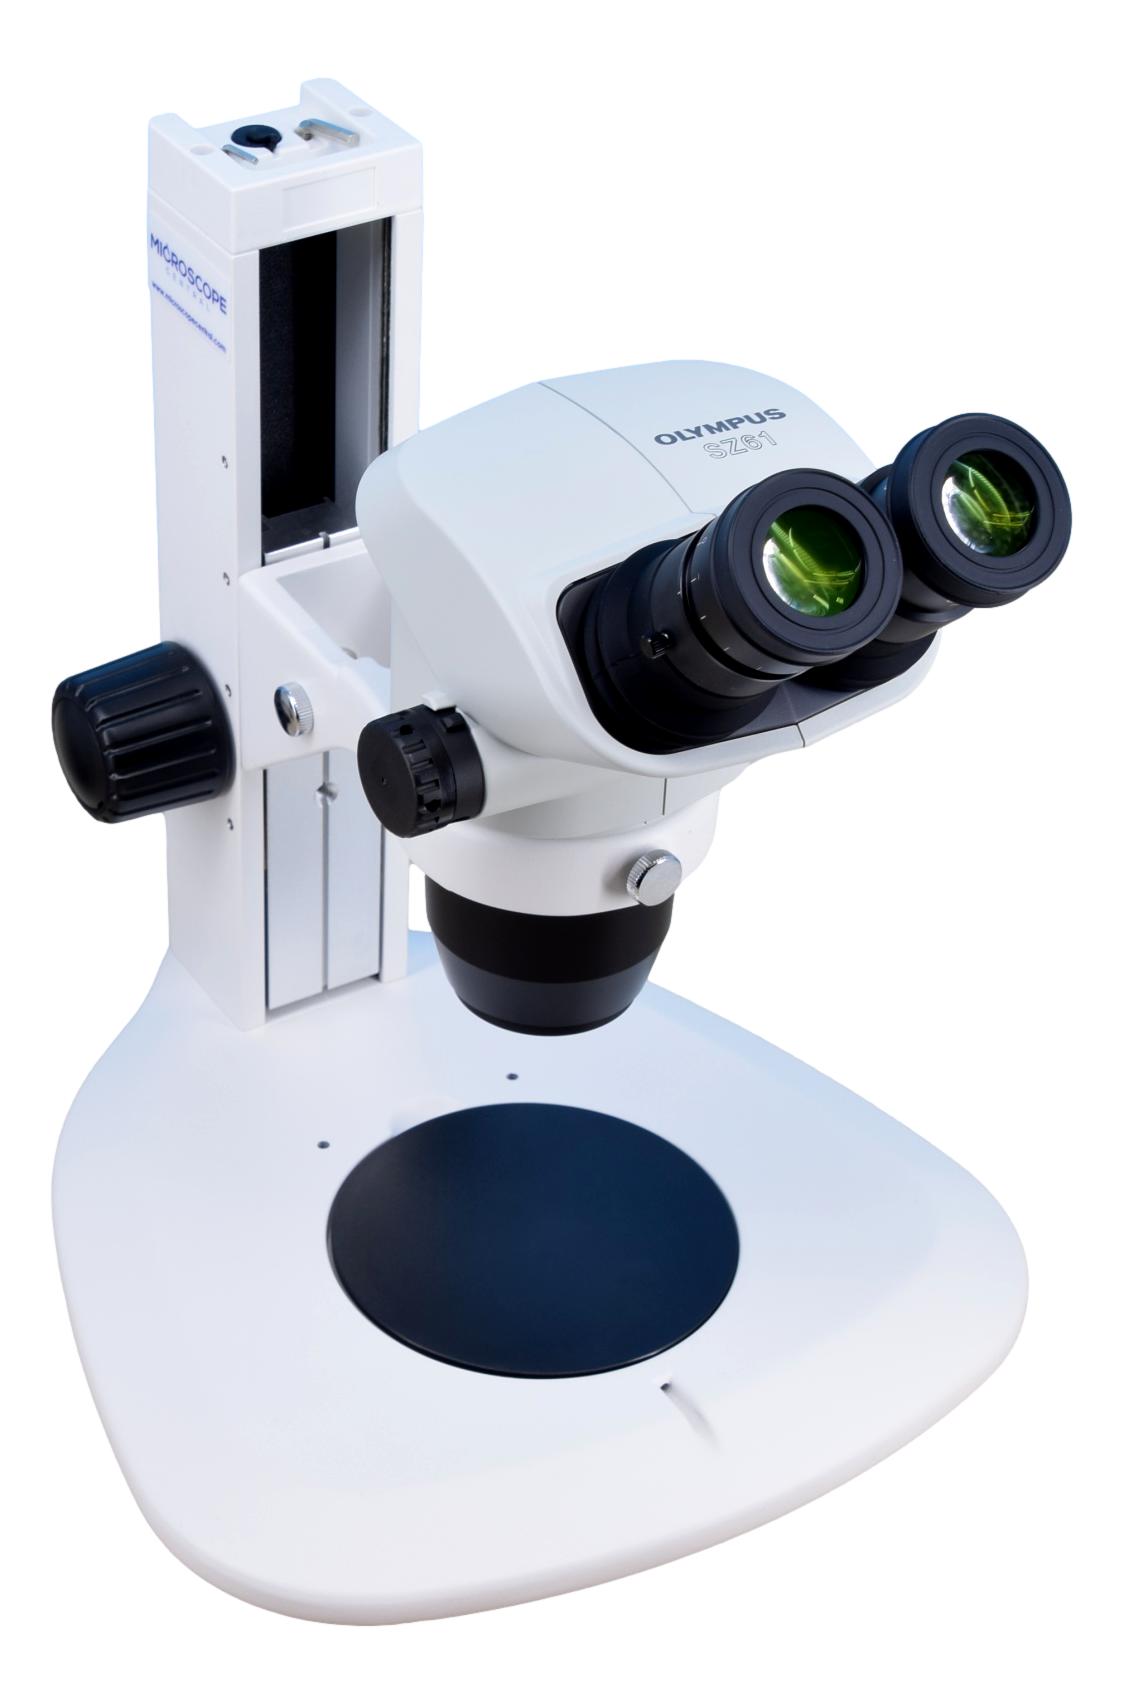 Olympus SZ61 Stereo Microscope 0.67x - 4.5x